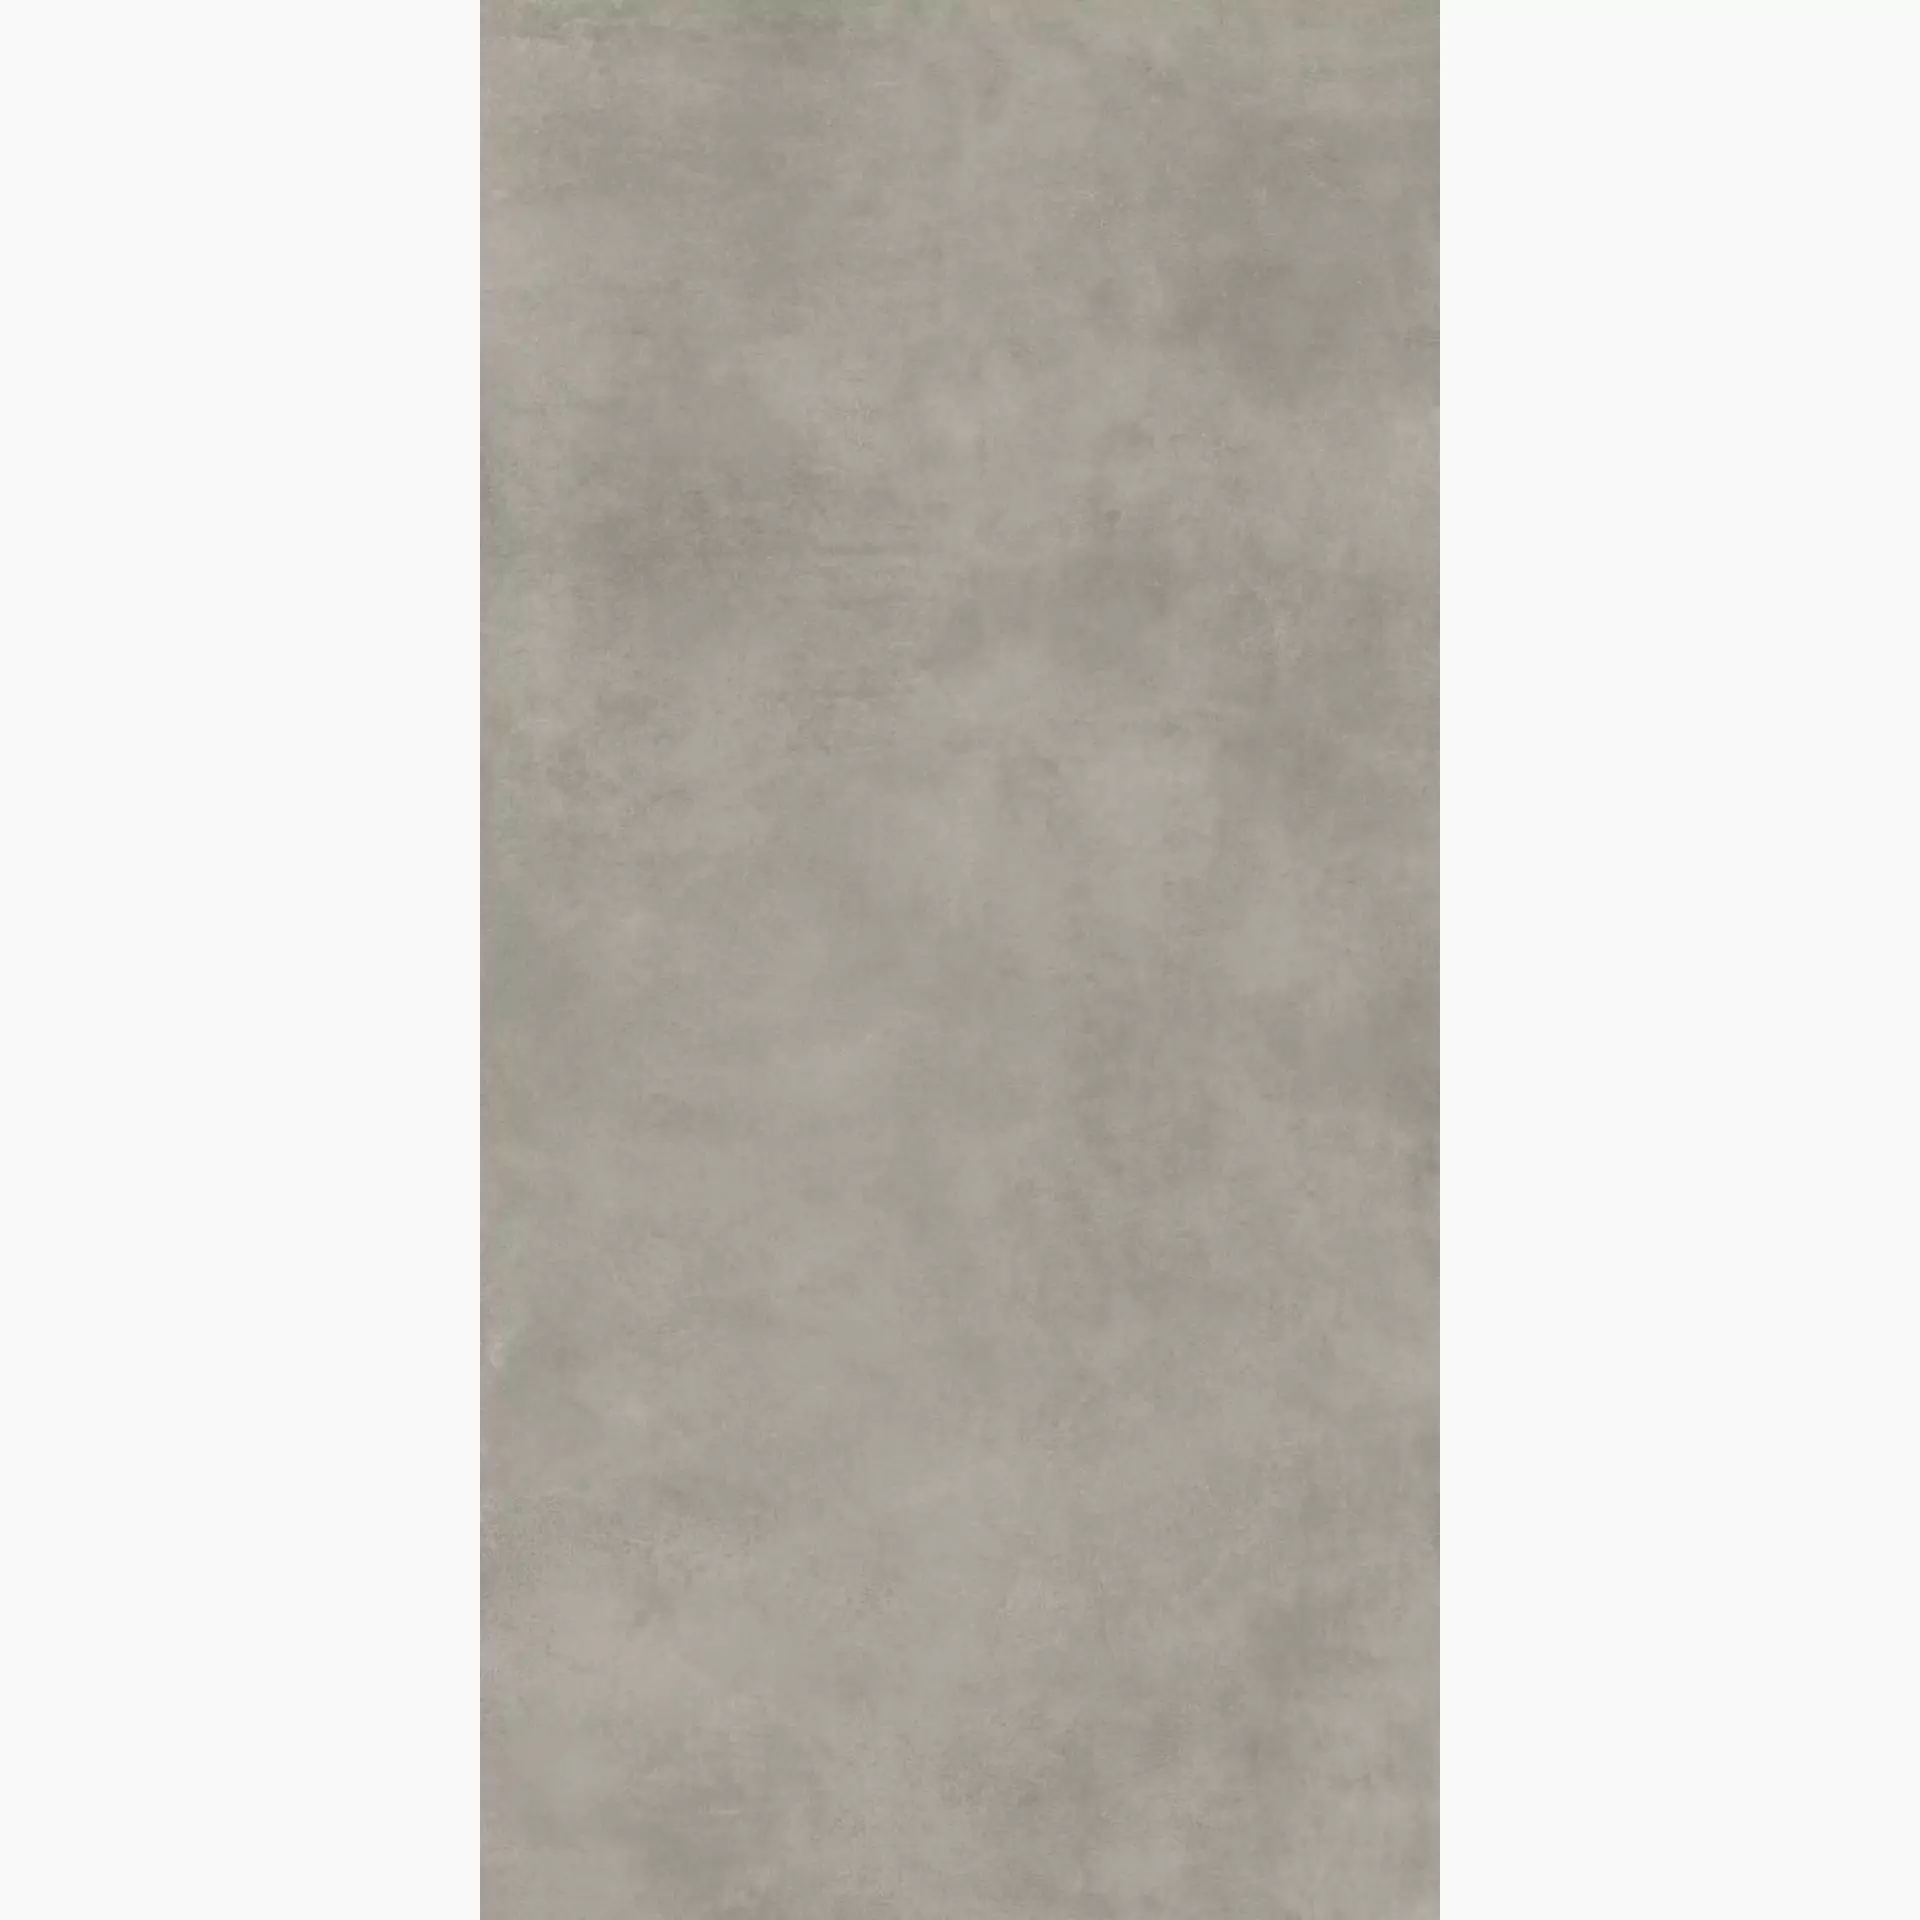 Bodenfliese Marazzi Grande Concrete Look Smoke Naturale – Matt Smoke M37X matt natur 160x320cm 6mm